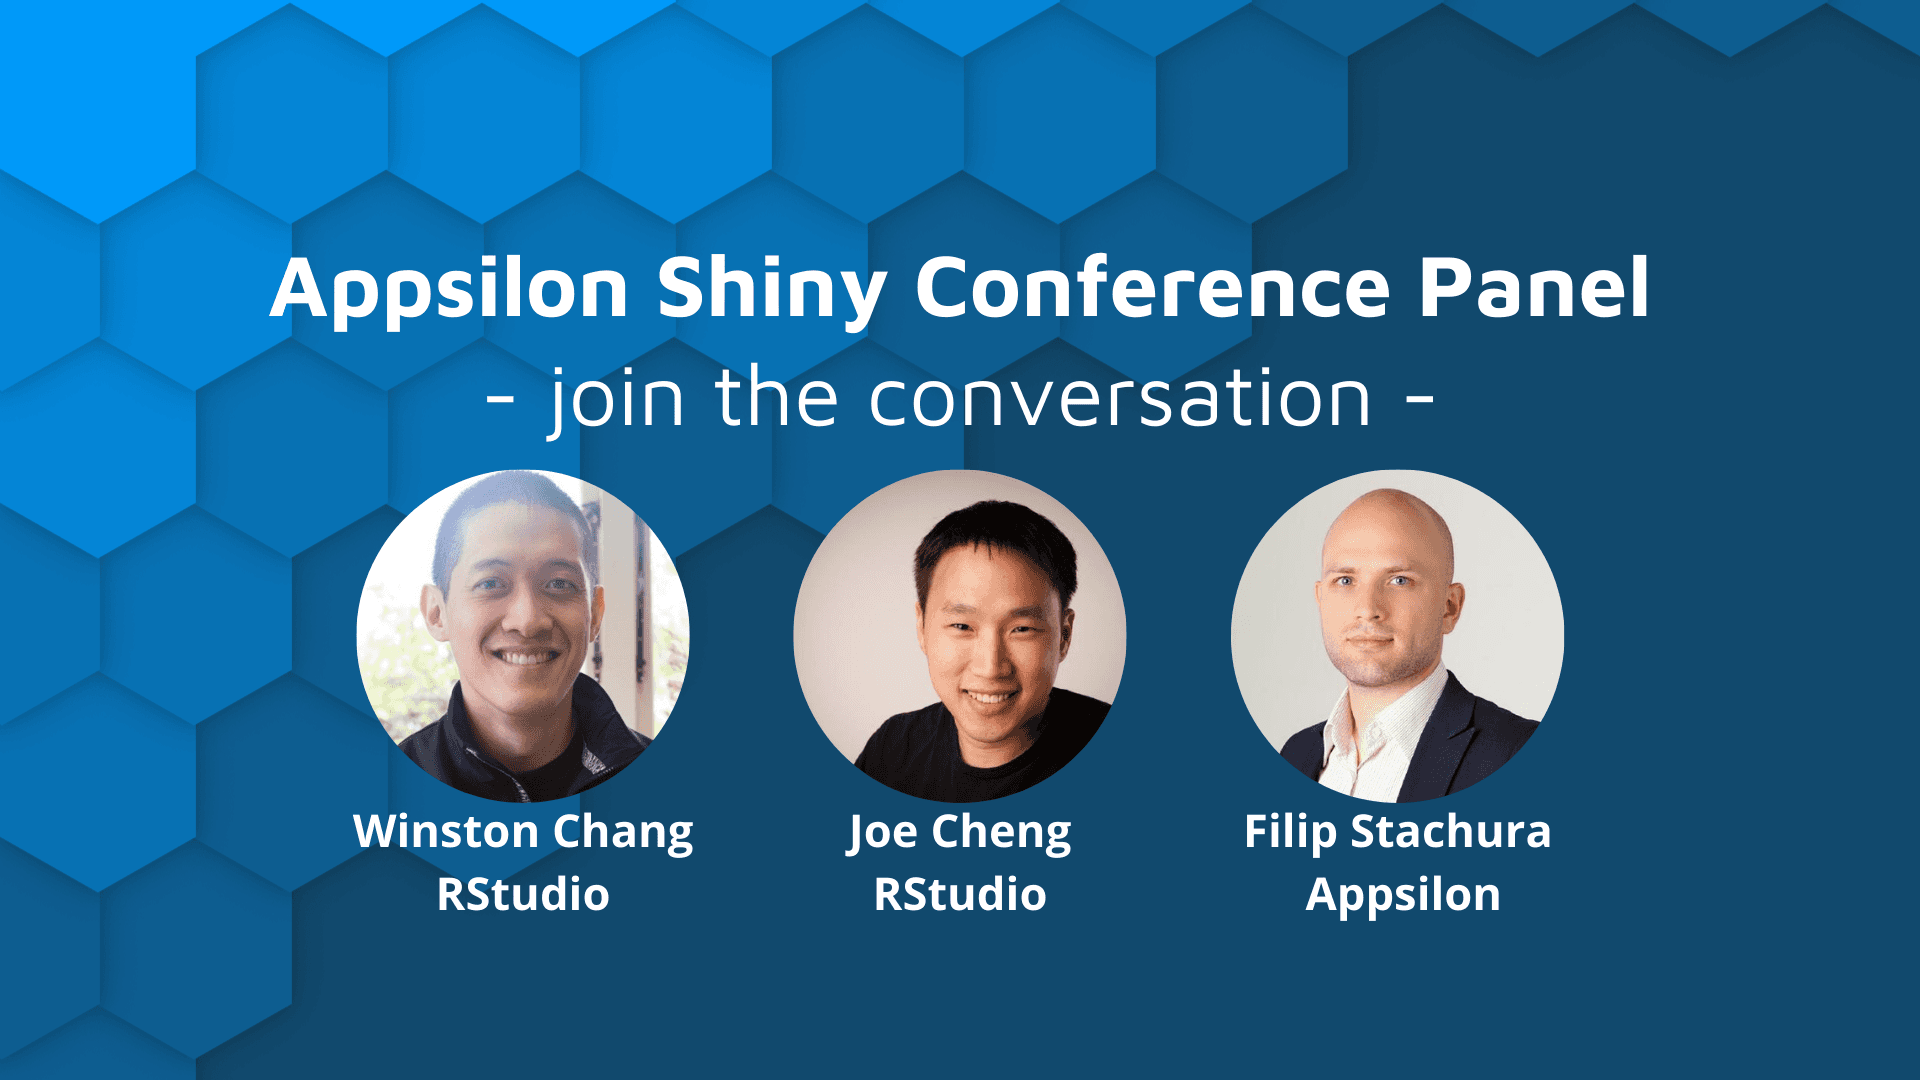 'appsilon shiny conference panel' with panelist profiles